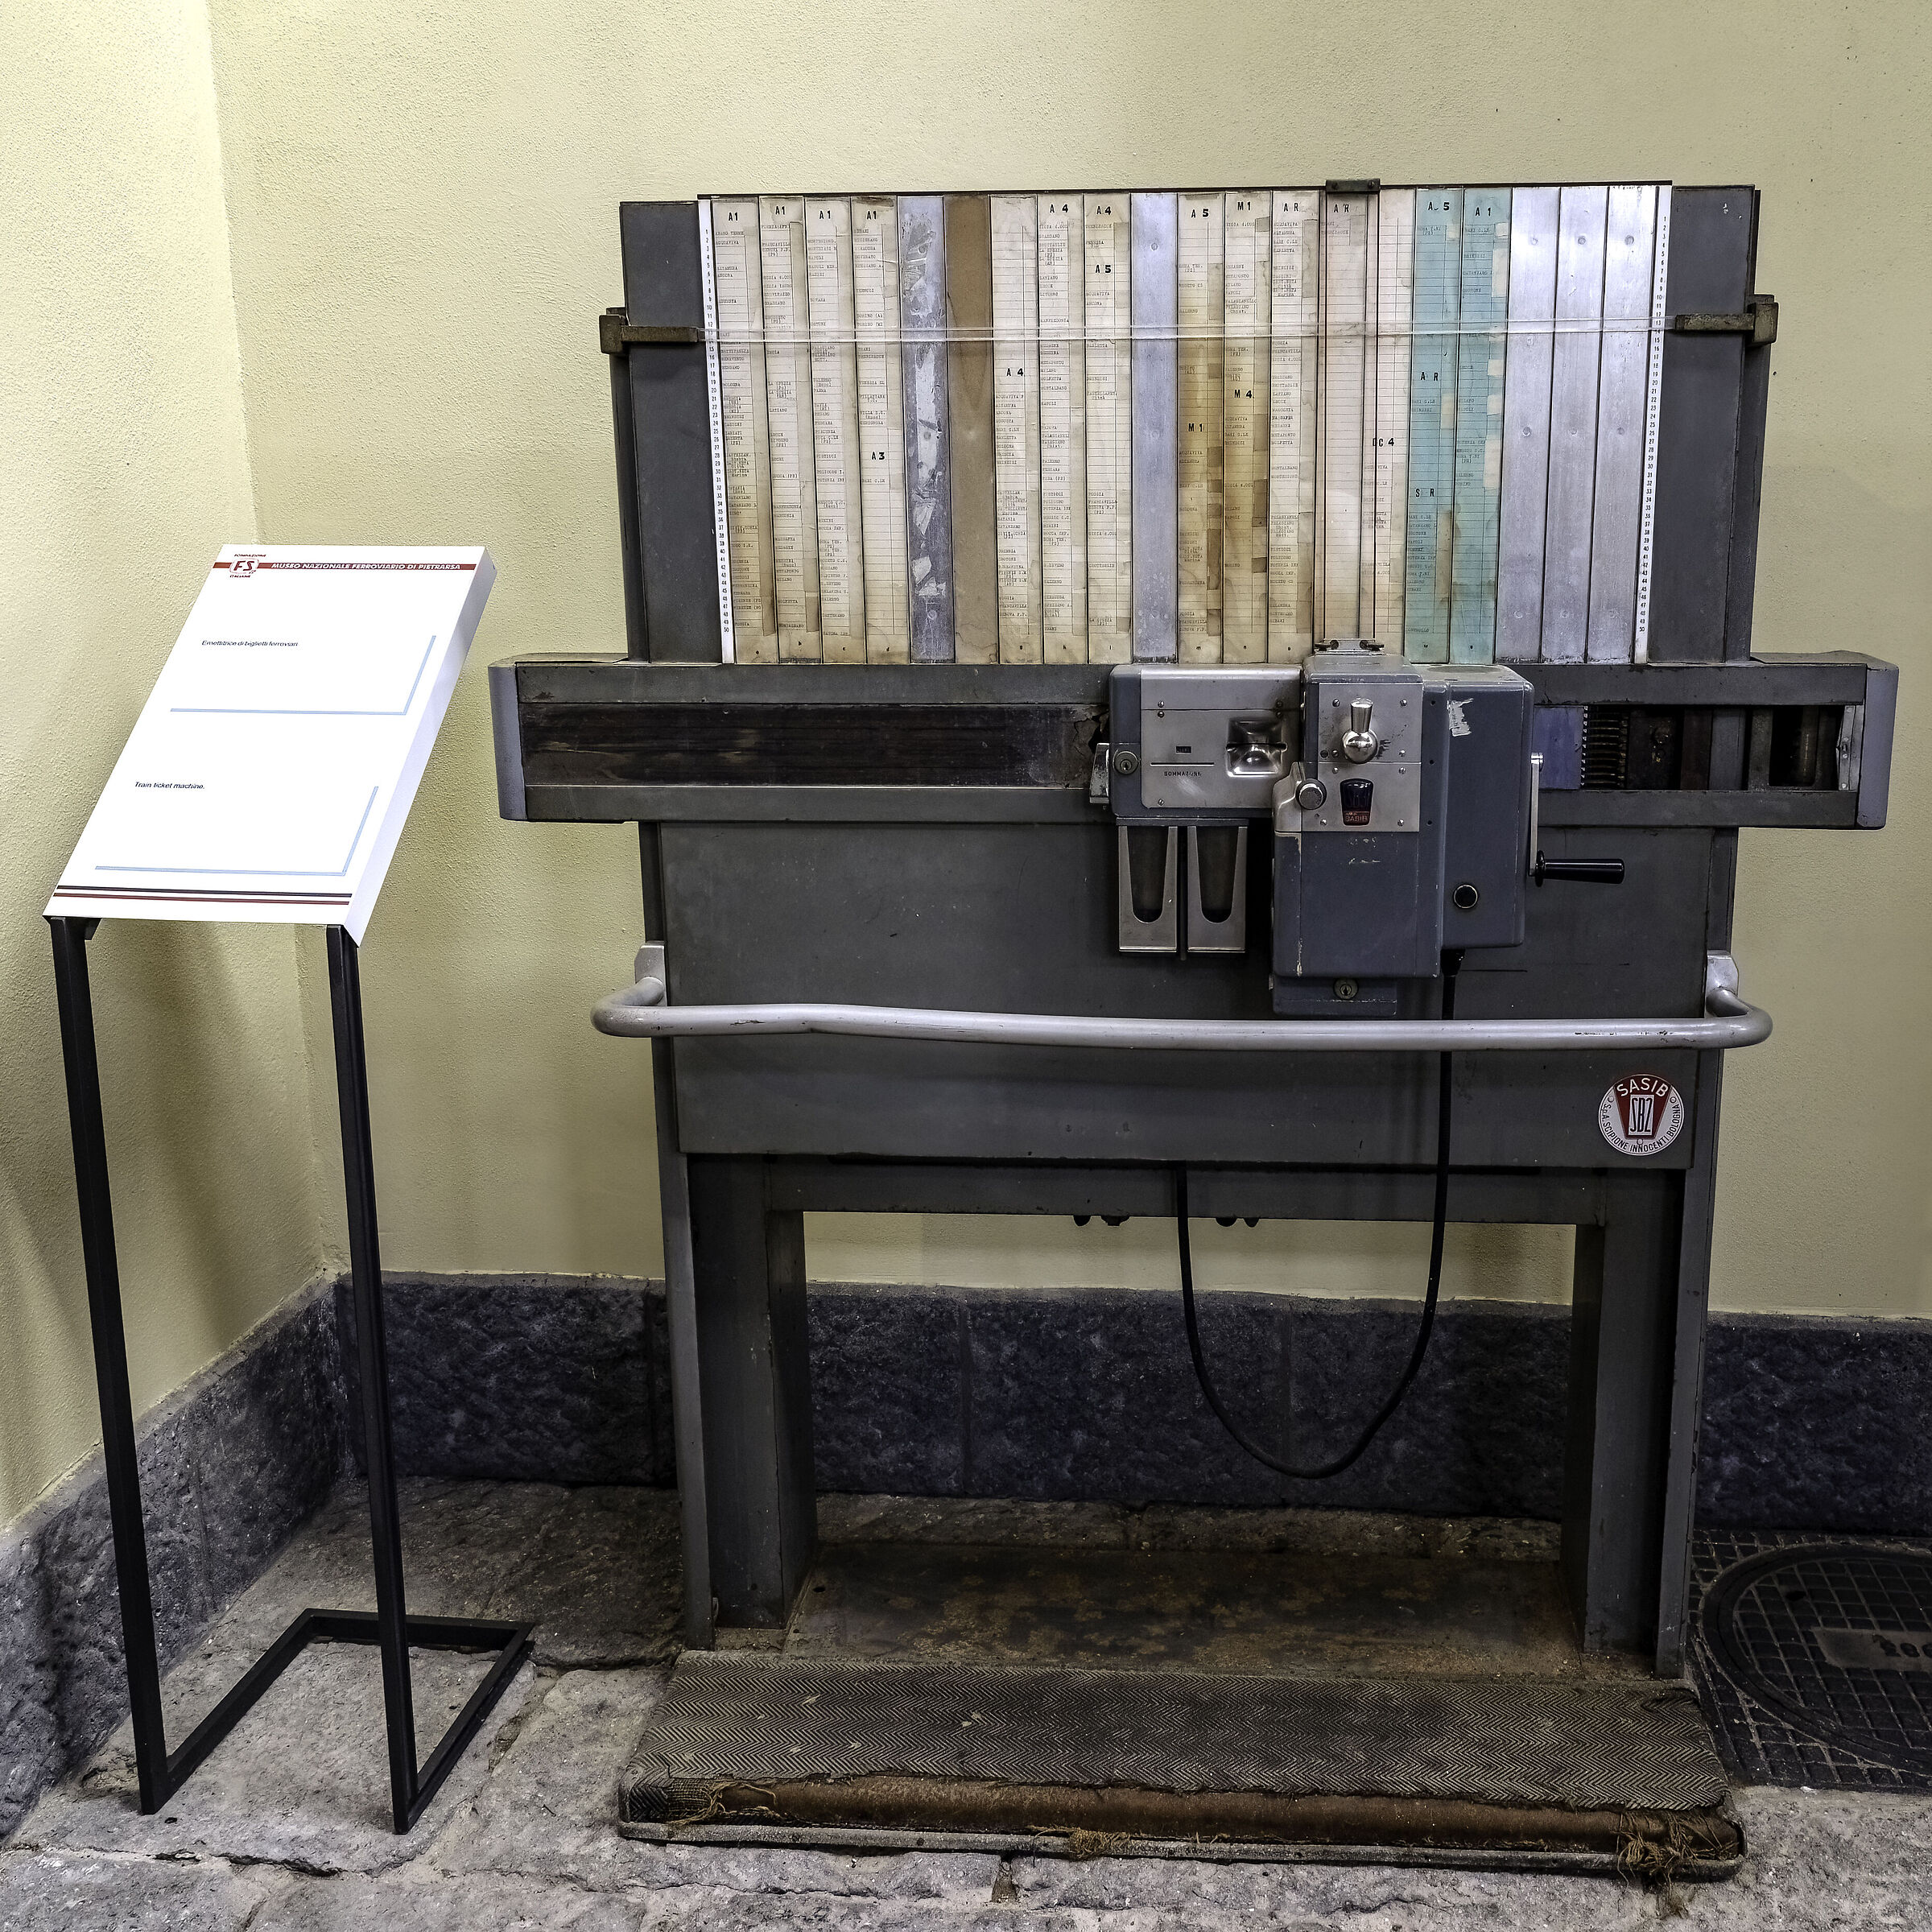  Ticketing machine,SASIB - Pietrarsa...